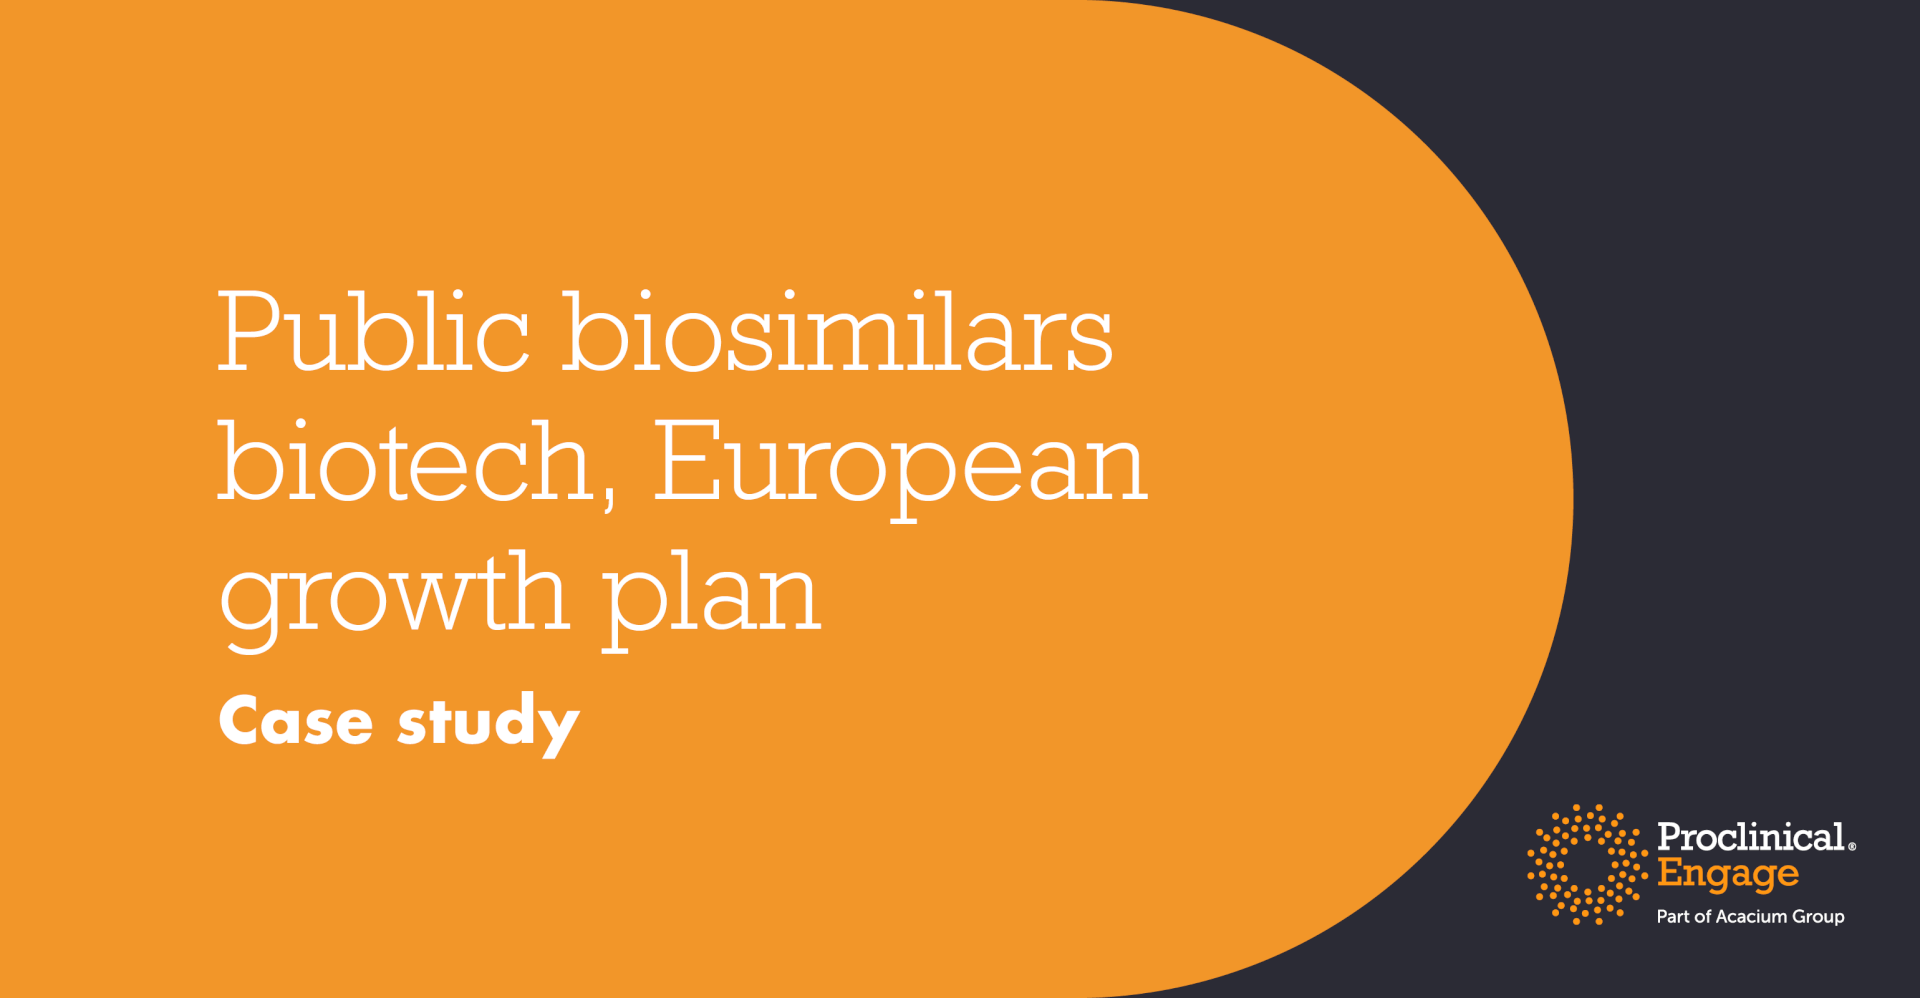 Public biosimilars biotech, European growth plan